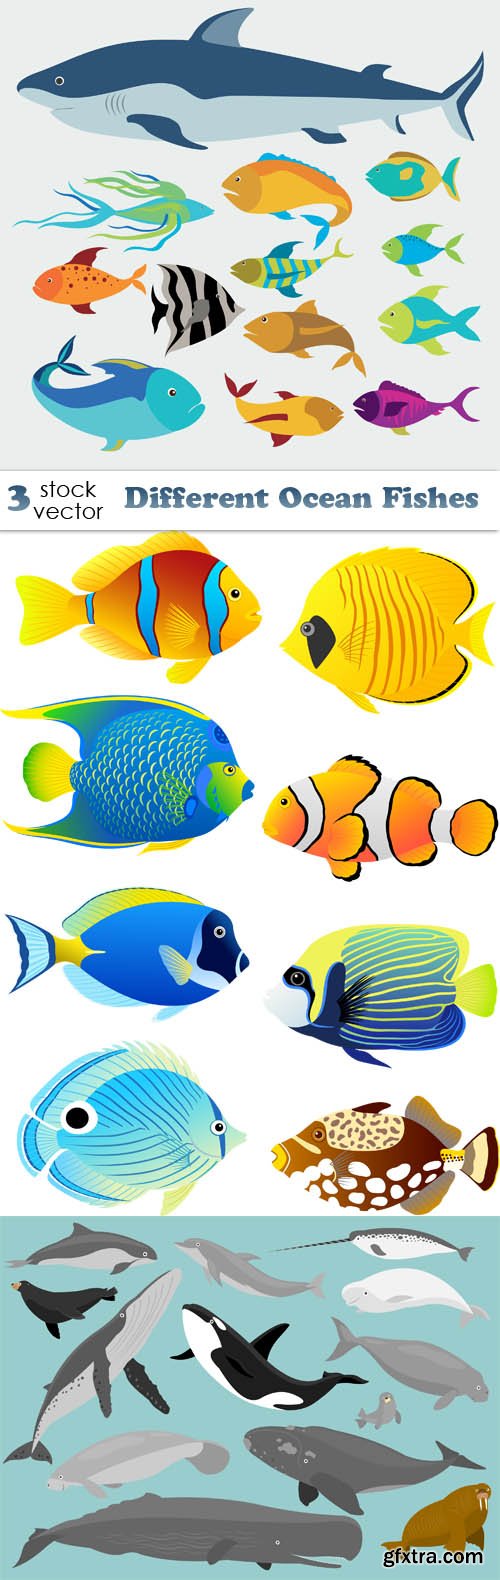 Vectors - Different Ocean Fishes